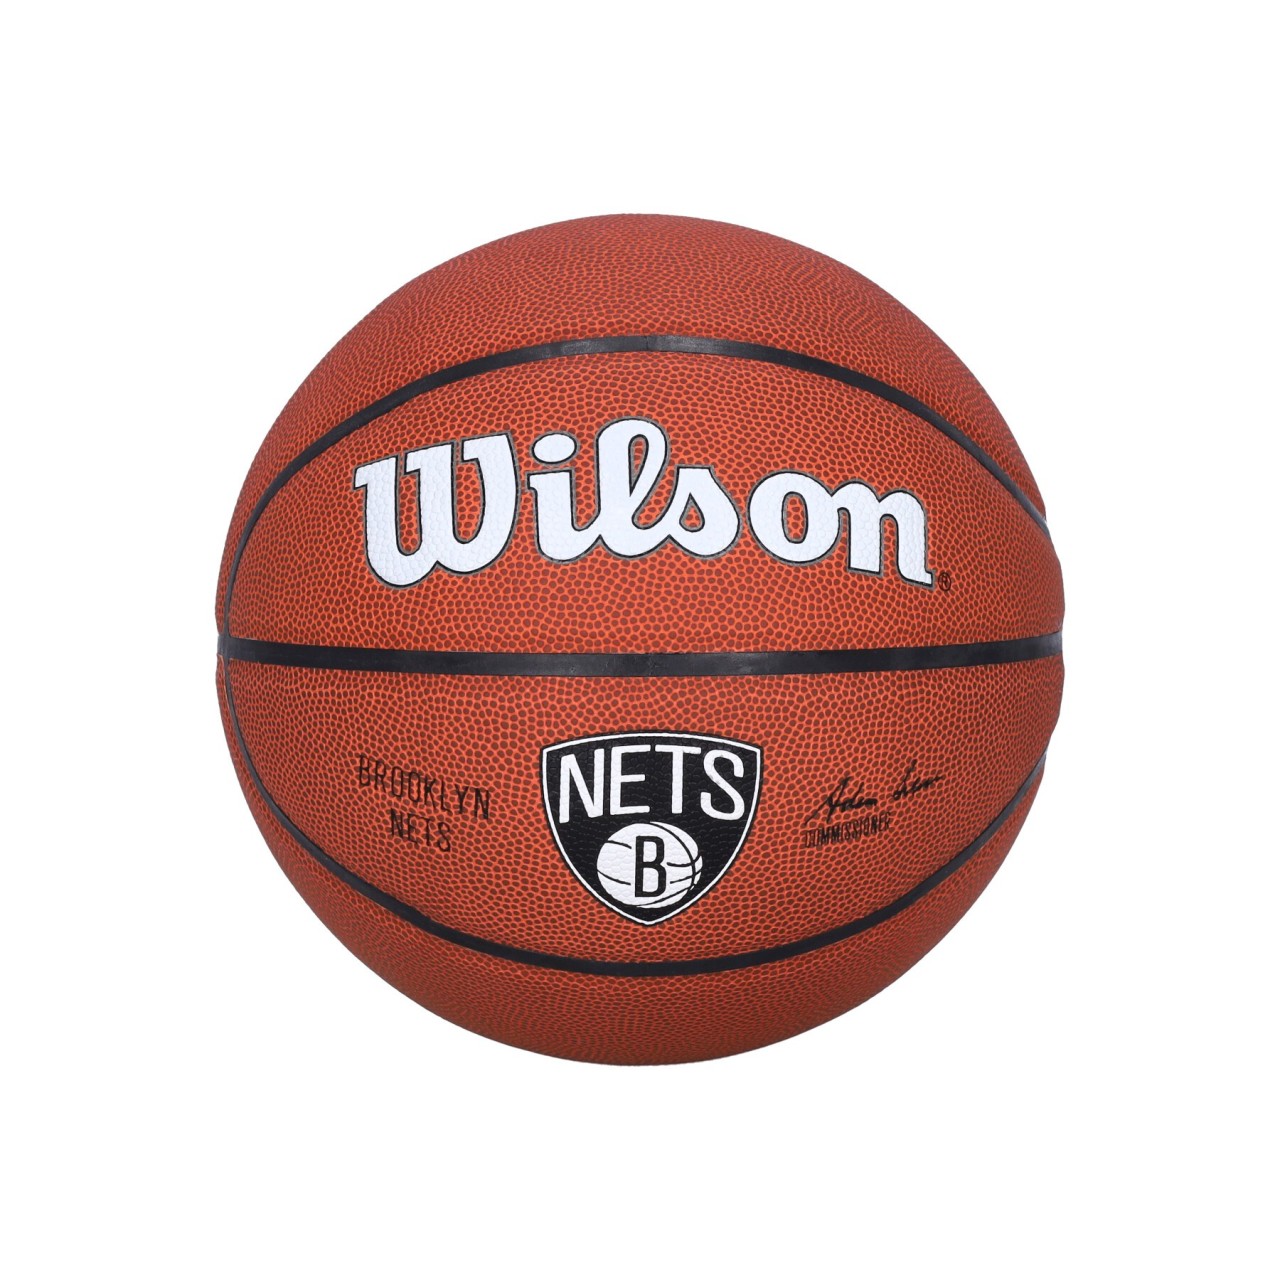 WILSON TEAM NBA TEAM ALLIANCE BASKETBALL SIZE 7 BRONET WTB3100XBBRO